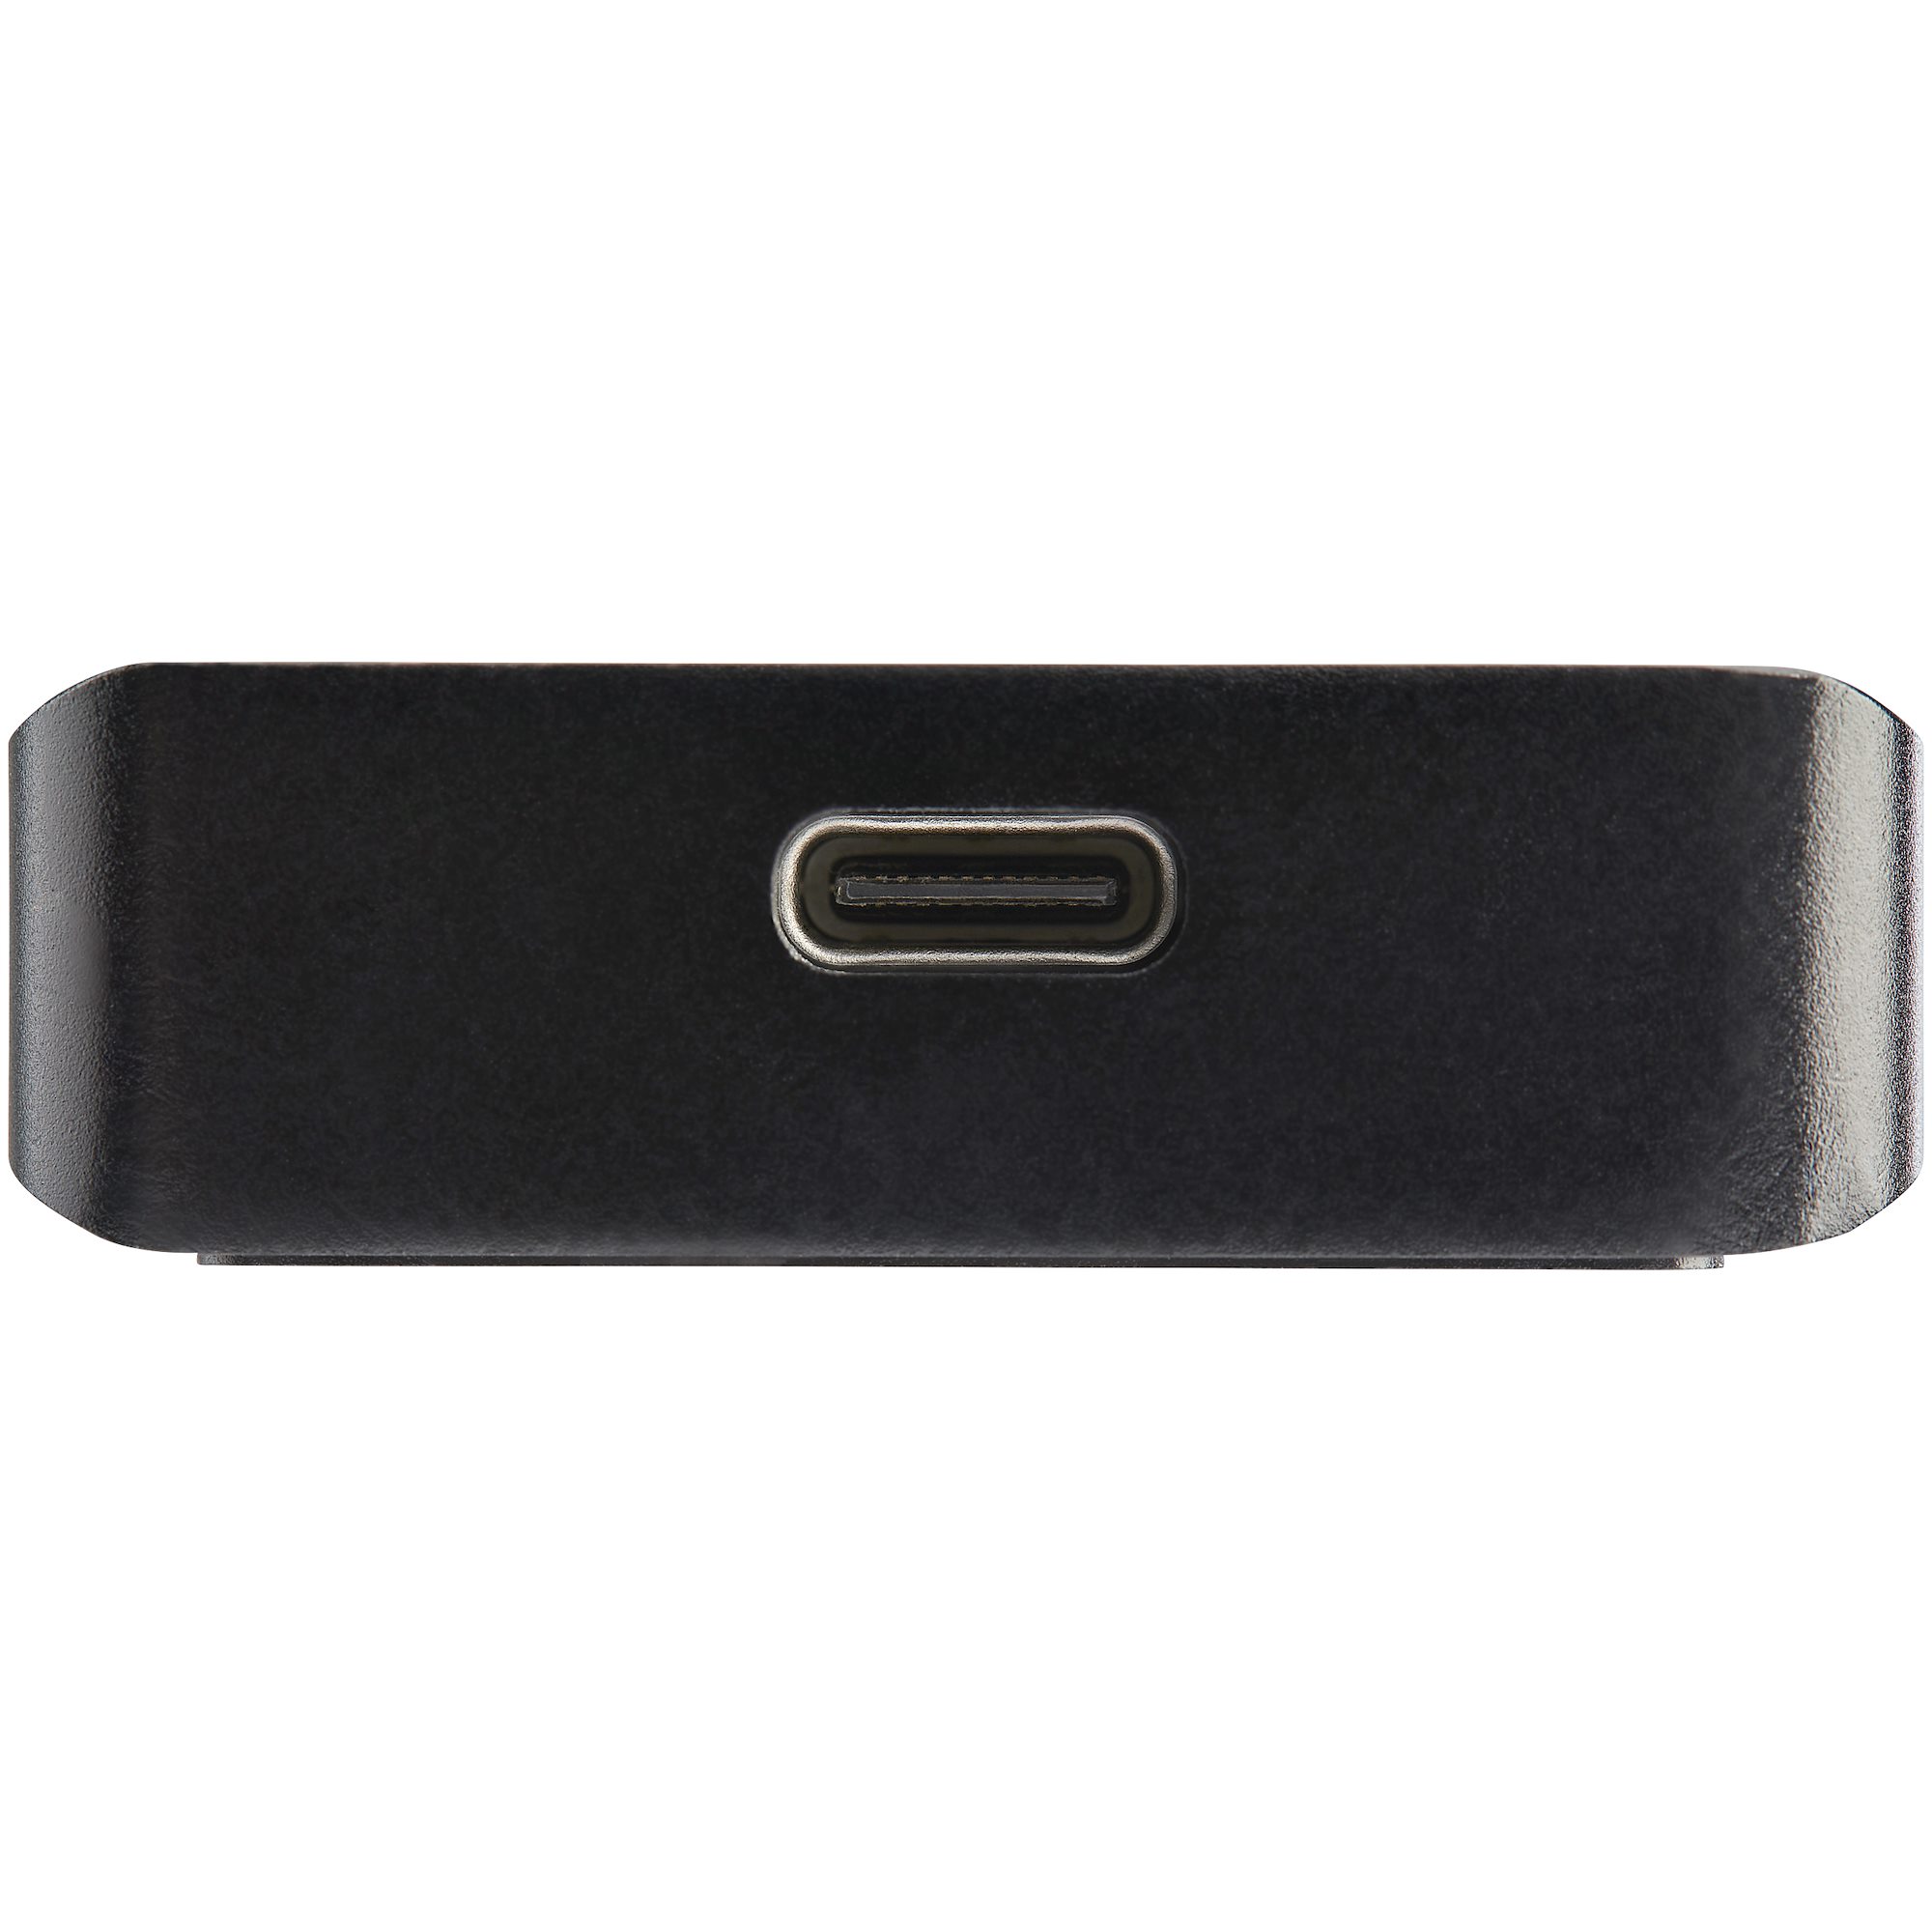 Boîtier SSD - M2 Nvme M-key Pcie Mobile Hard Drive Enclosure Box